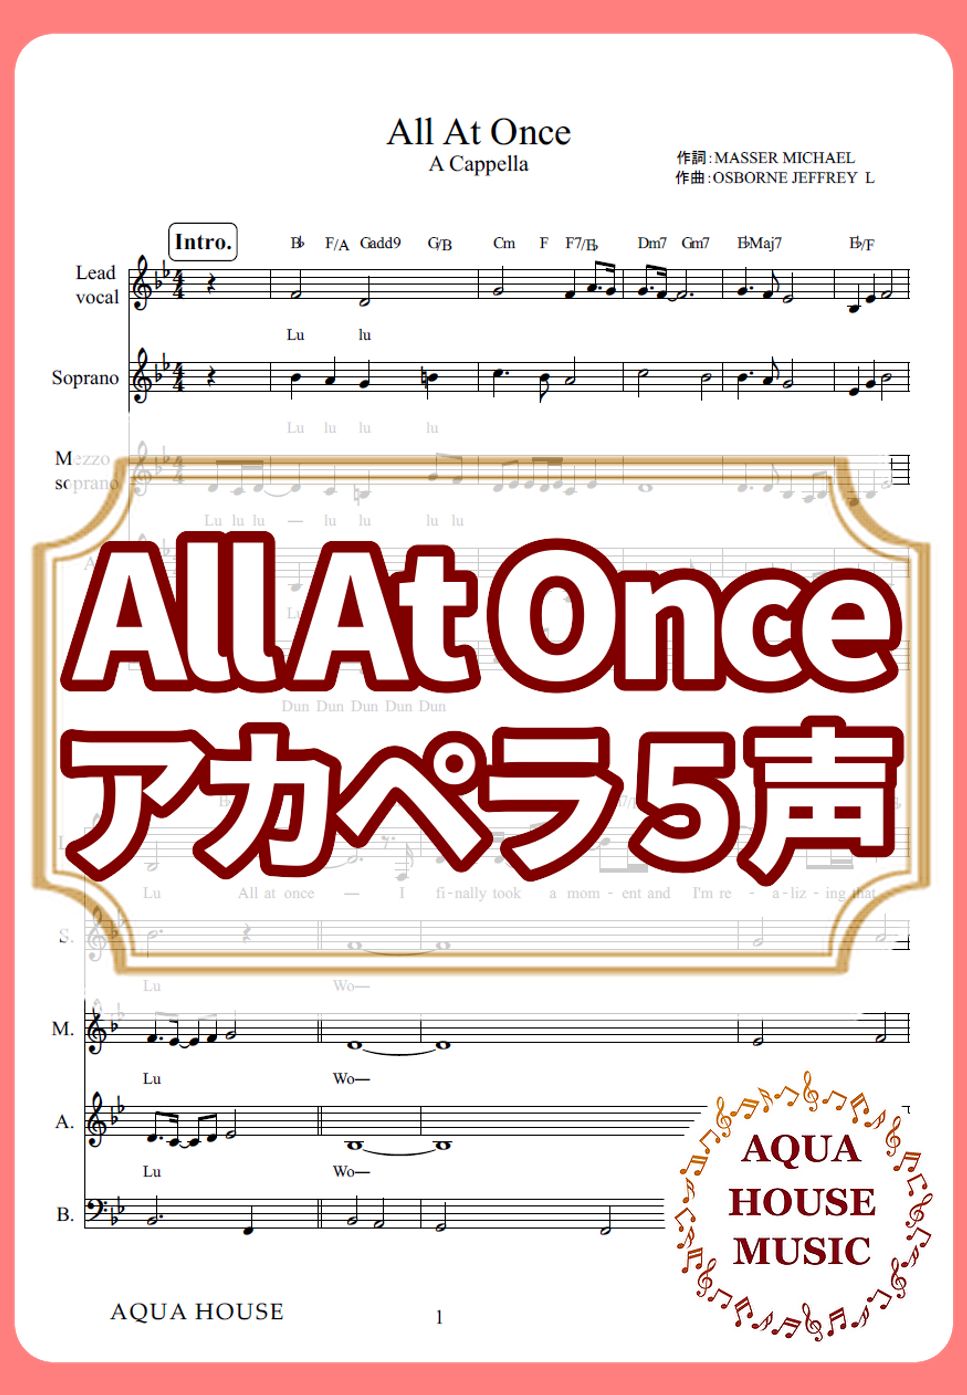 Whitney Houston - All At Once (アカペラ楽譜♪5声ボイパなし) by 飯田 亜紗子